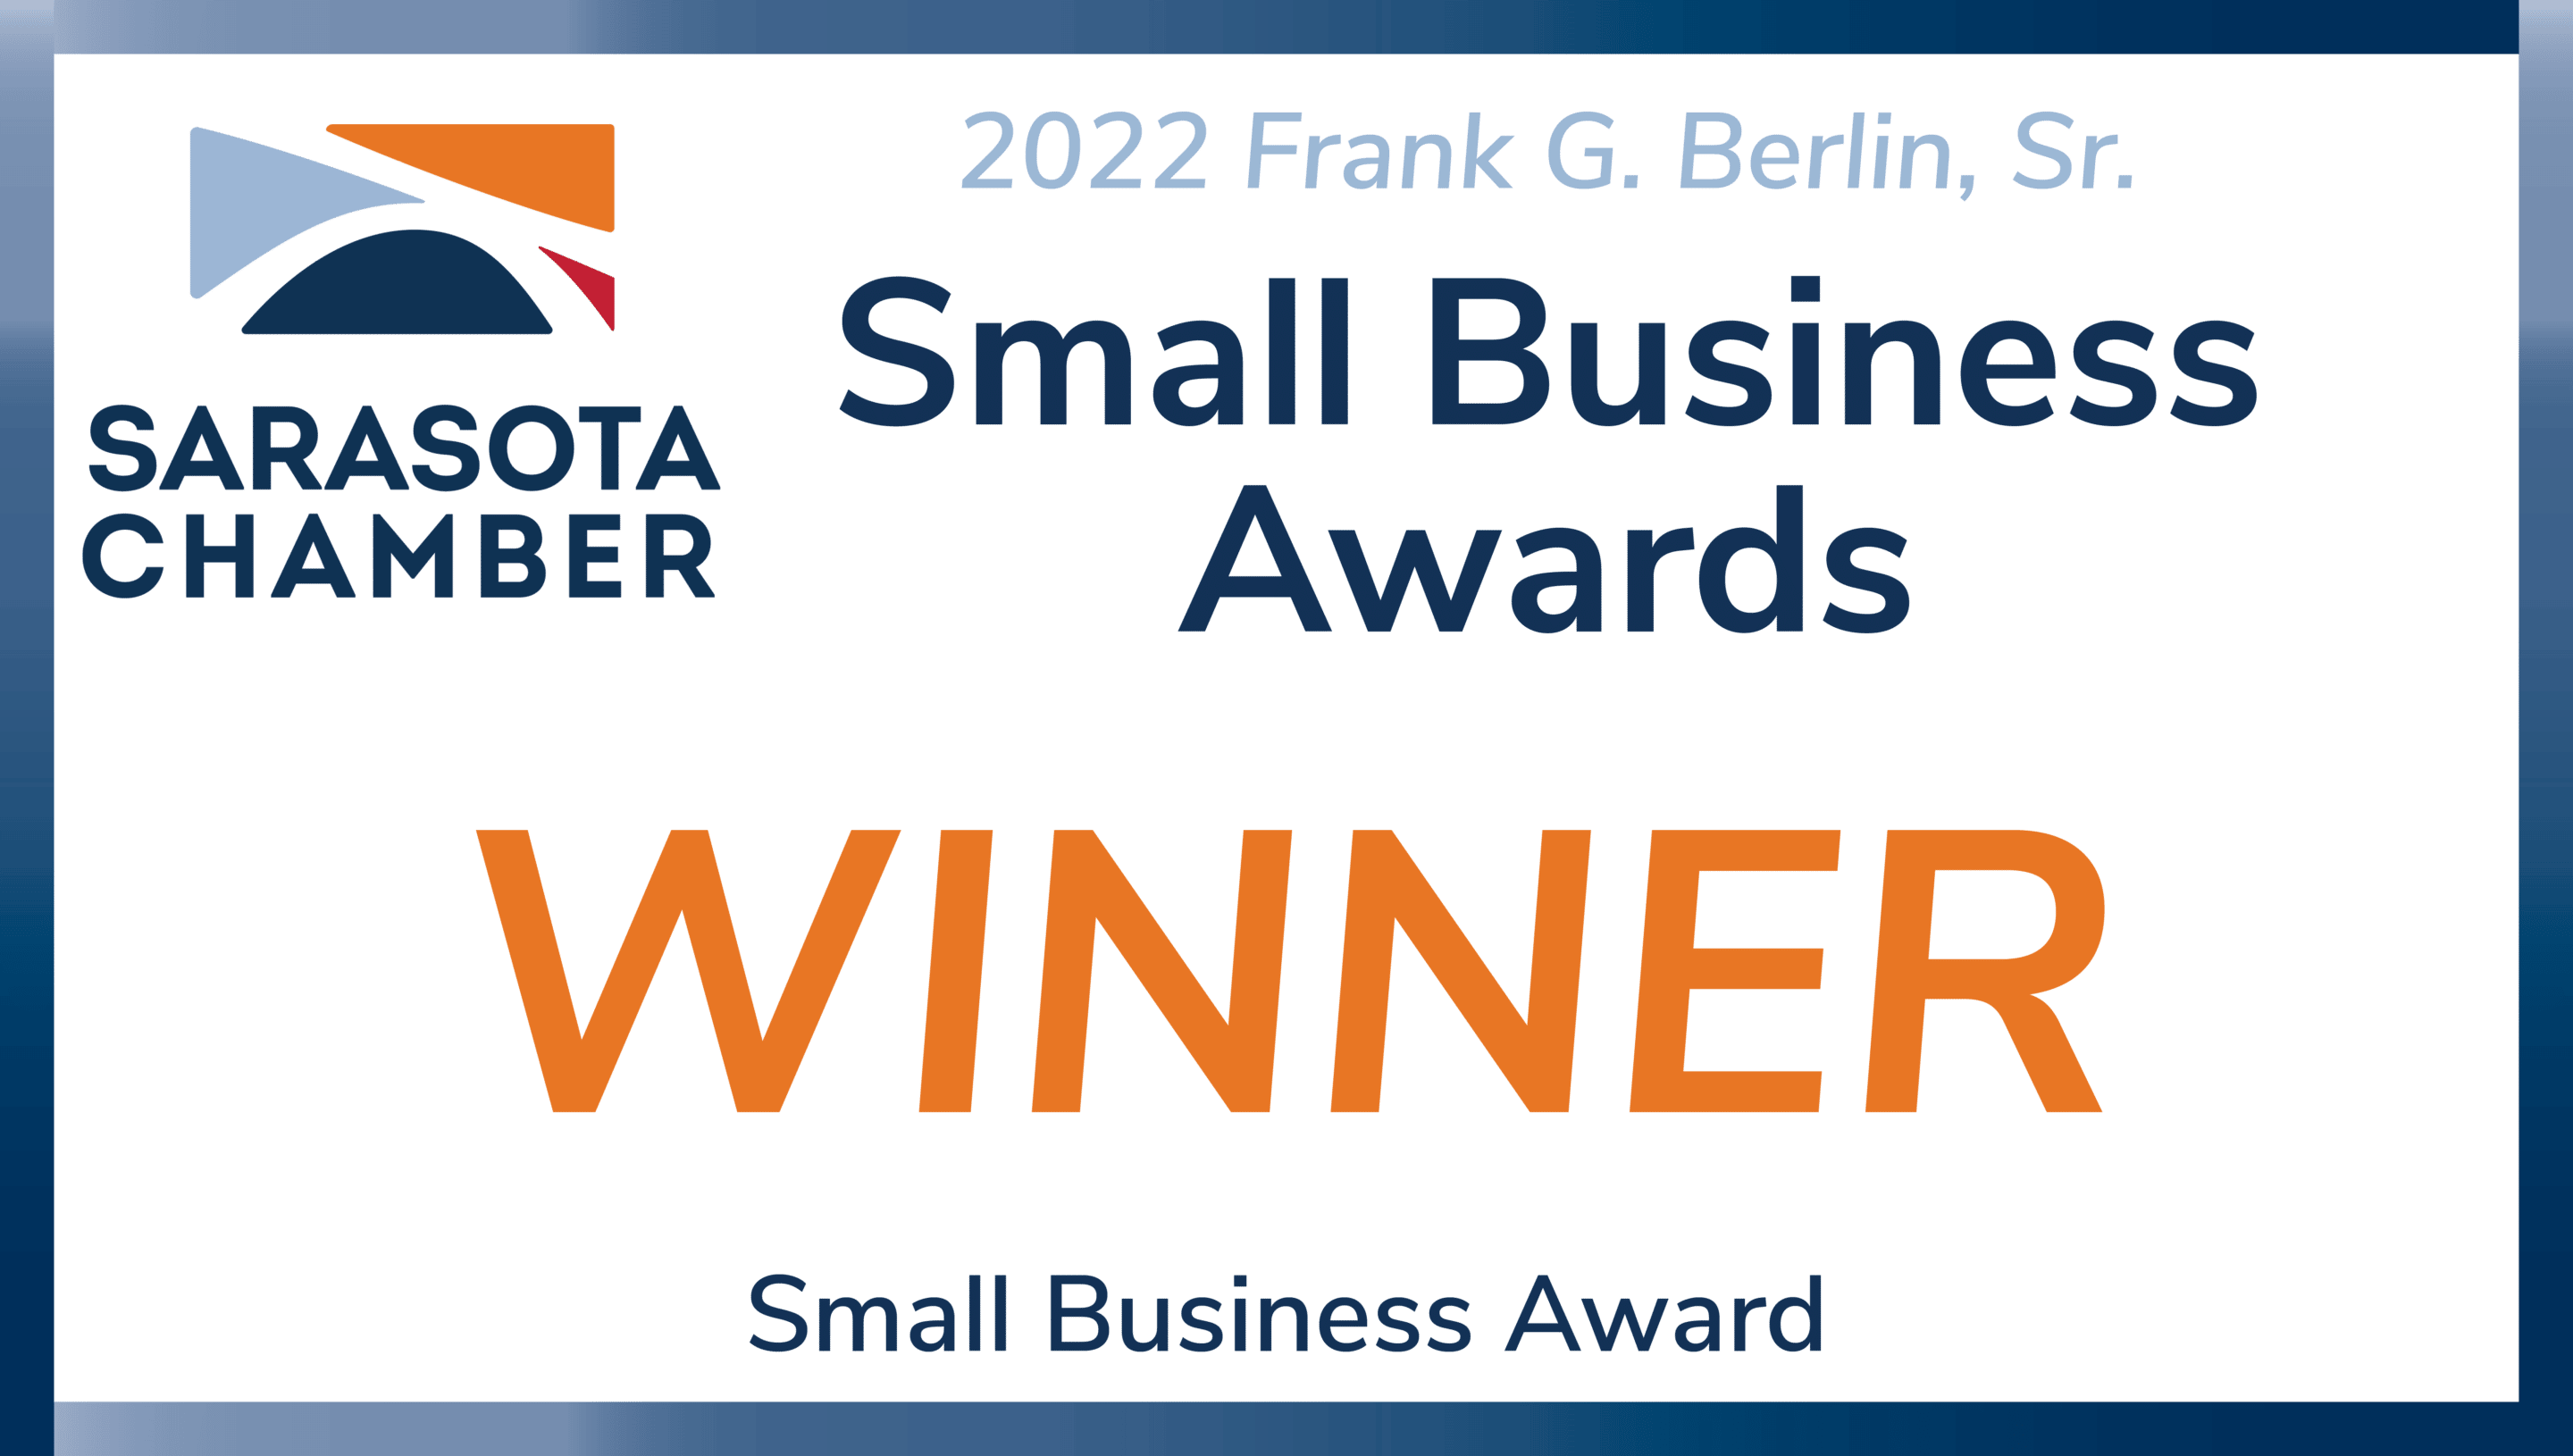 Sarasota Chamber Small Business Awards Winner